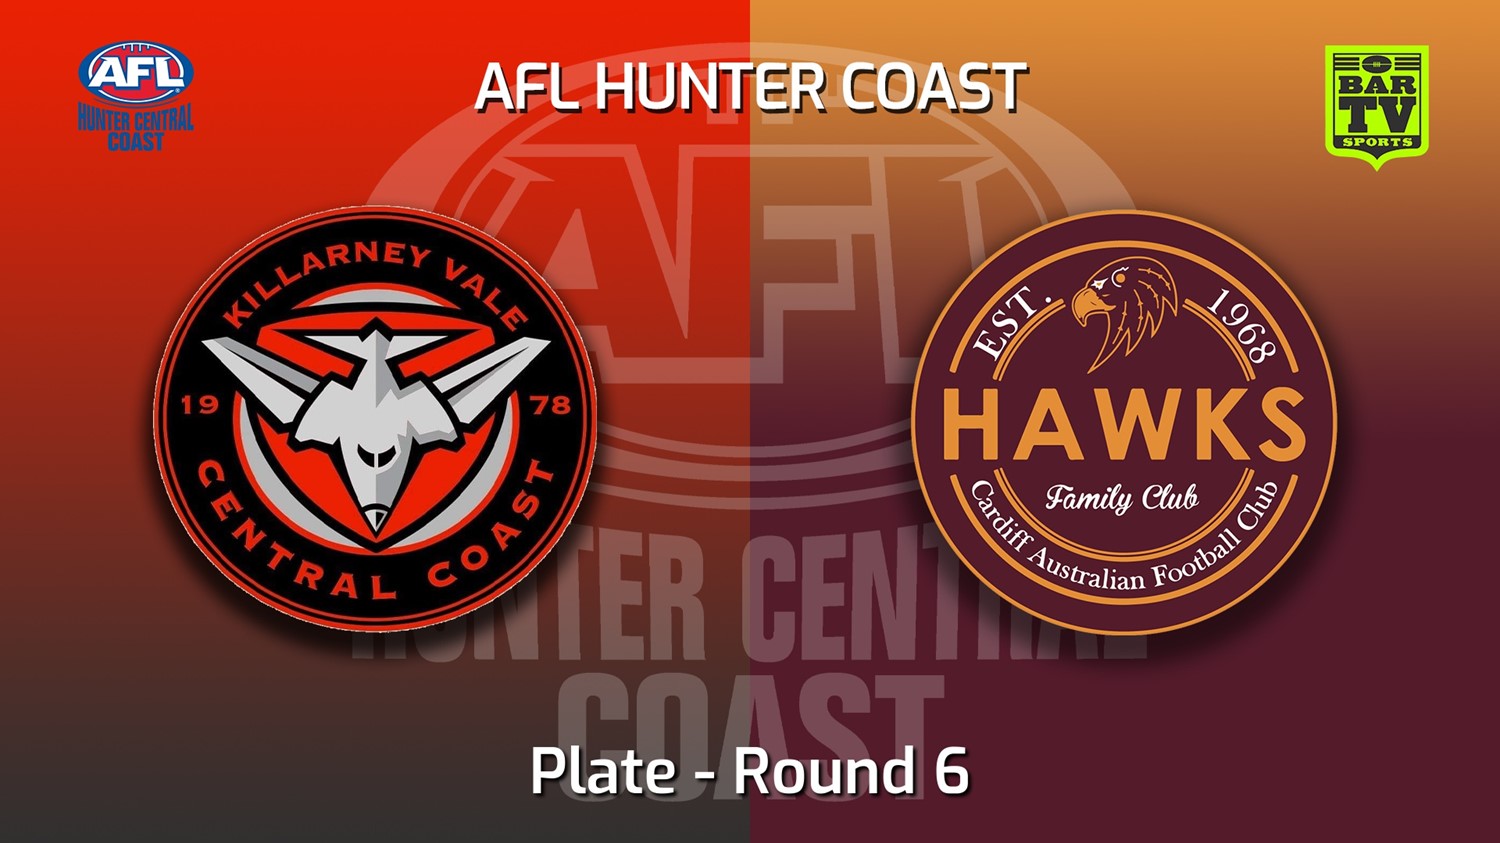 220604-AFL Hunter Central Coast Round 6 - Plate - Killarney Vale Bombers v Cardiff Hawks Slate Image